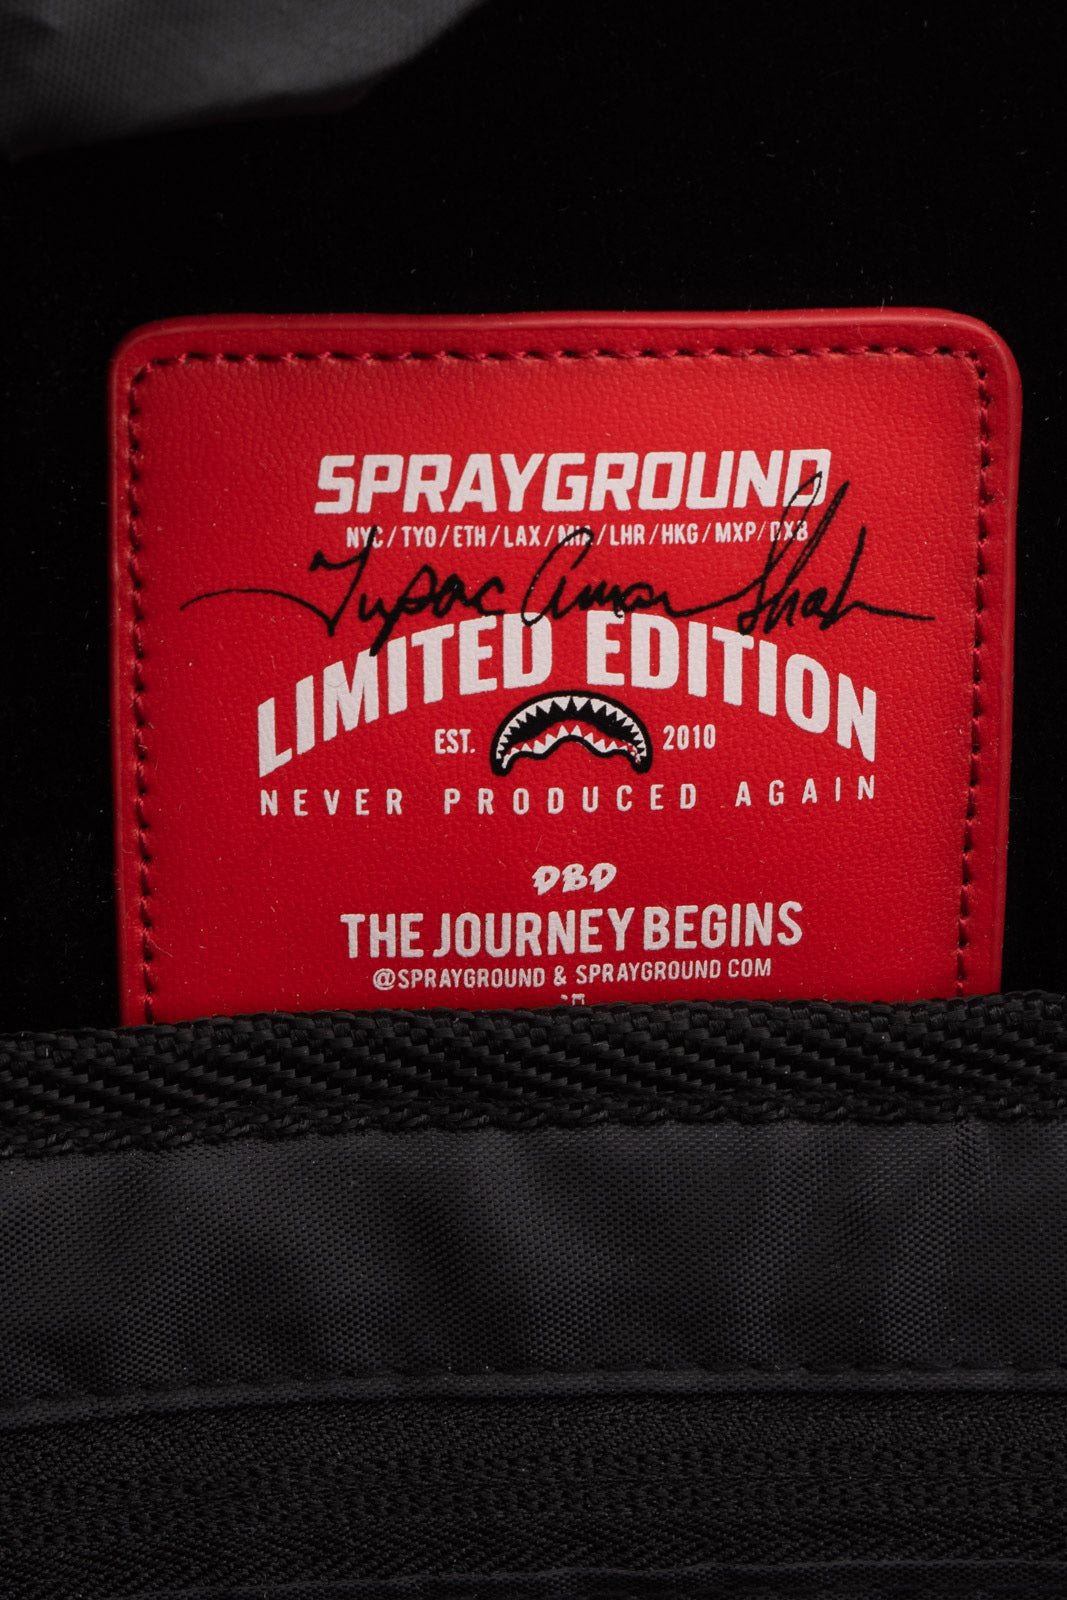 Sprayground Backpack Limited Edition 